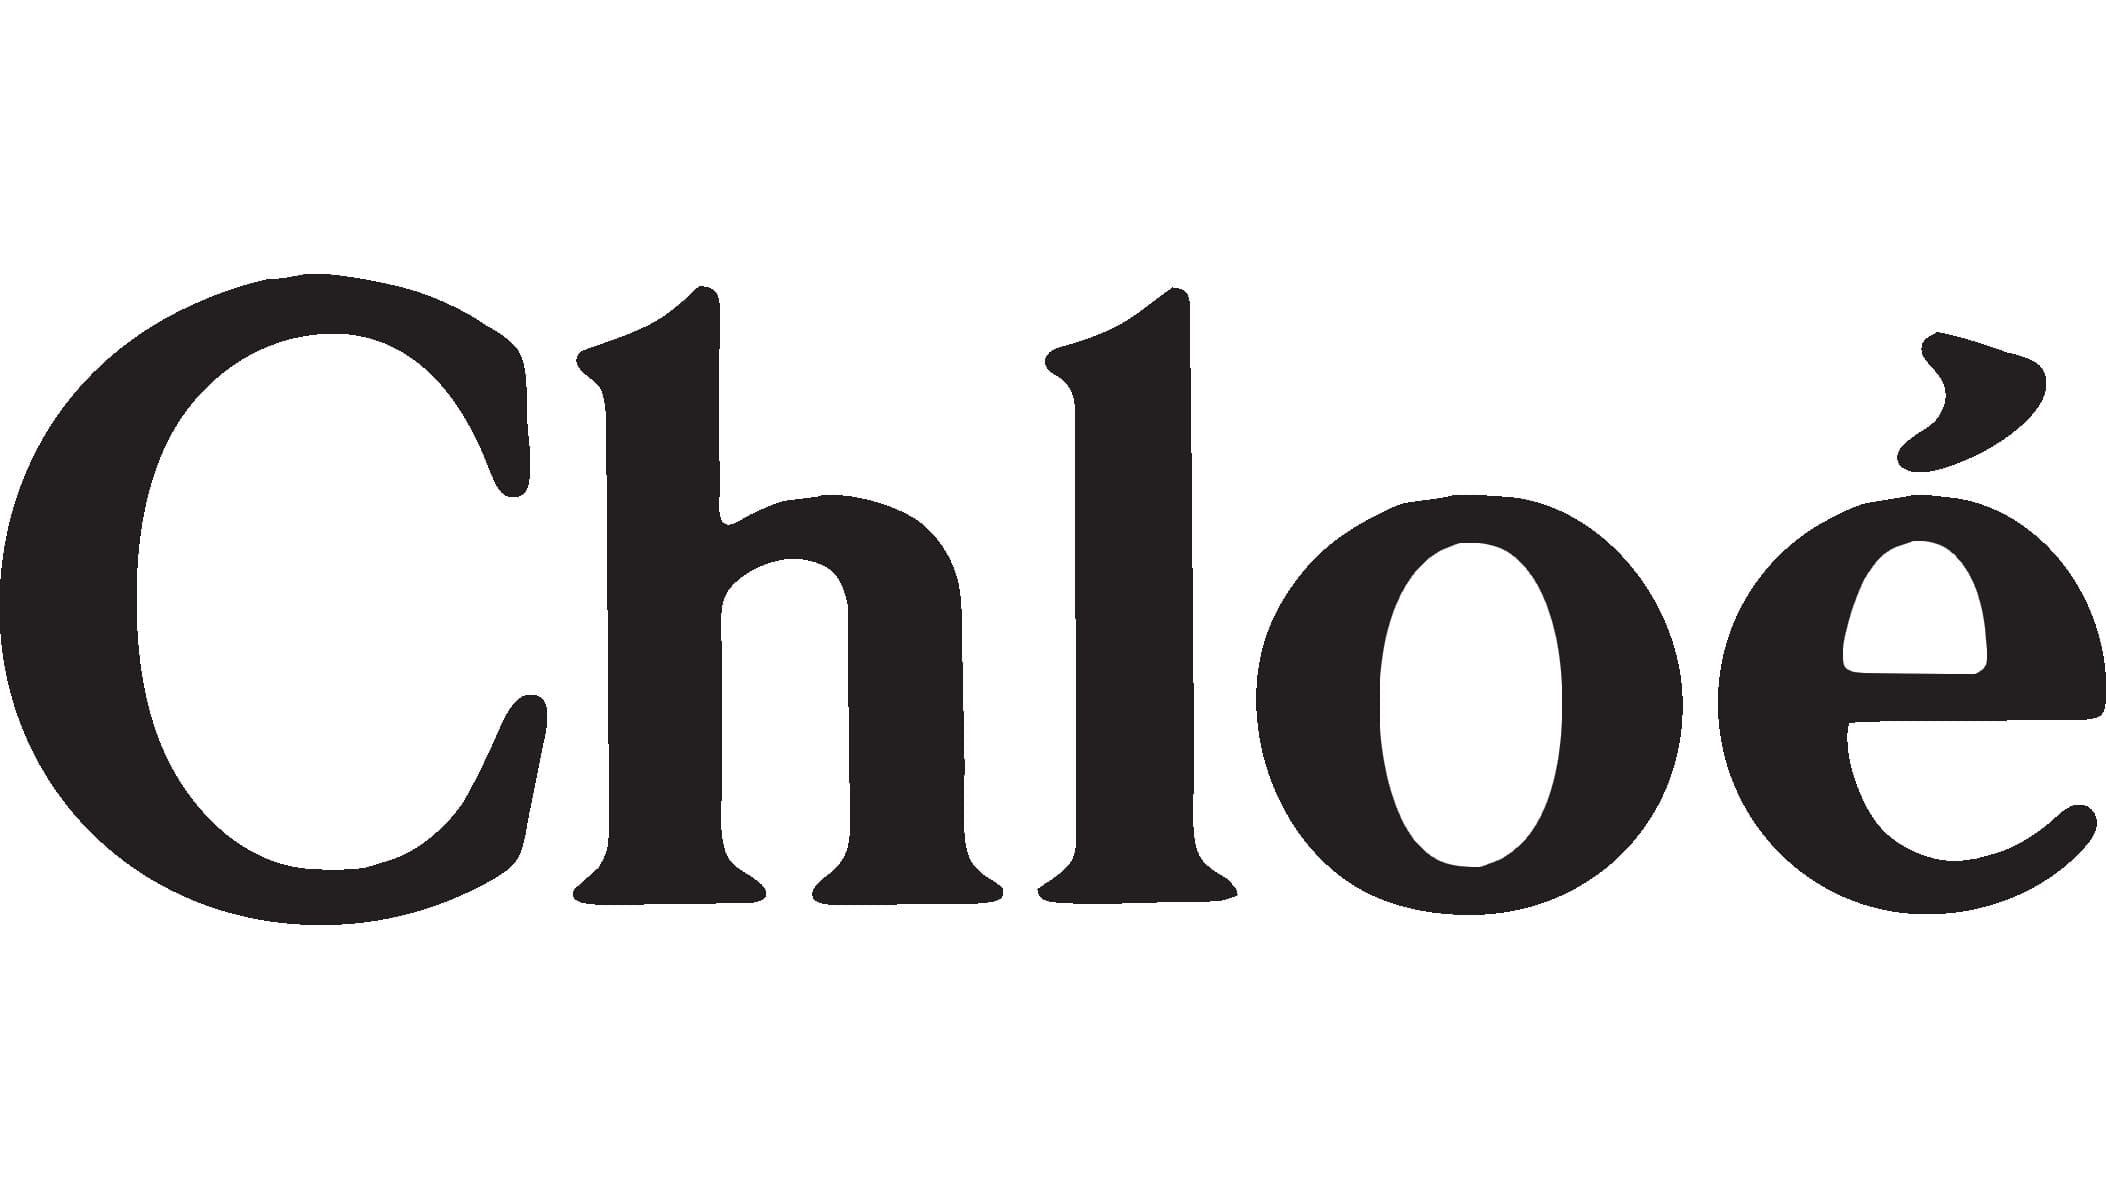 Chloé Review: Timeless Elegance and Feminine Designs Unveiled